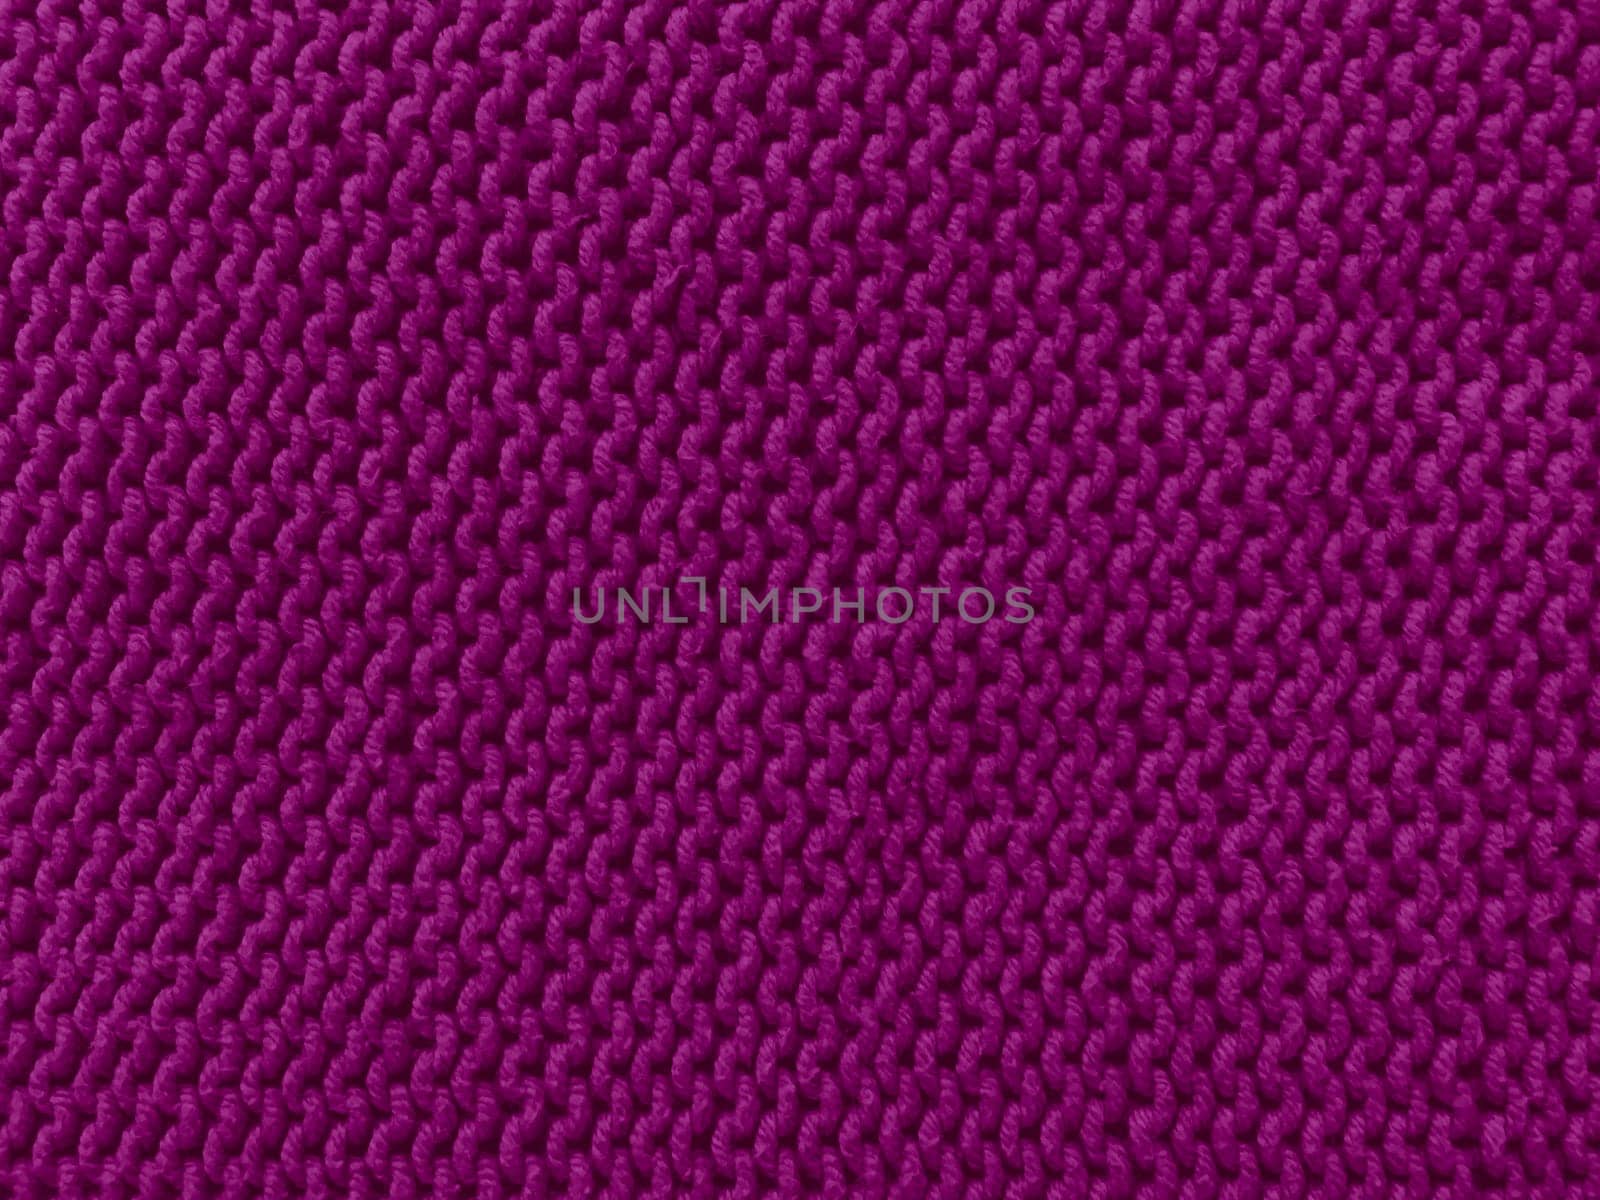 Knitted Background. Warm Wool Design. Knitwear Fiber Ornament. Knitting Texture. Scandinavian Macro Wallpaper. Abstract Cotton Thread. Vintage Handmade Cloth. Knitted Texture.